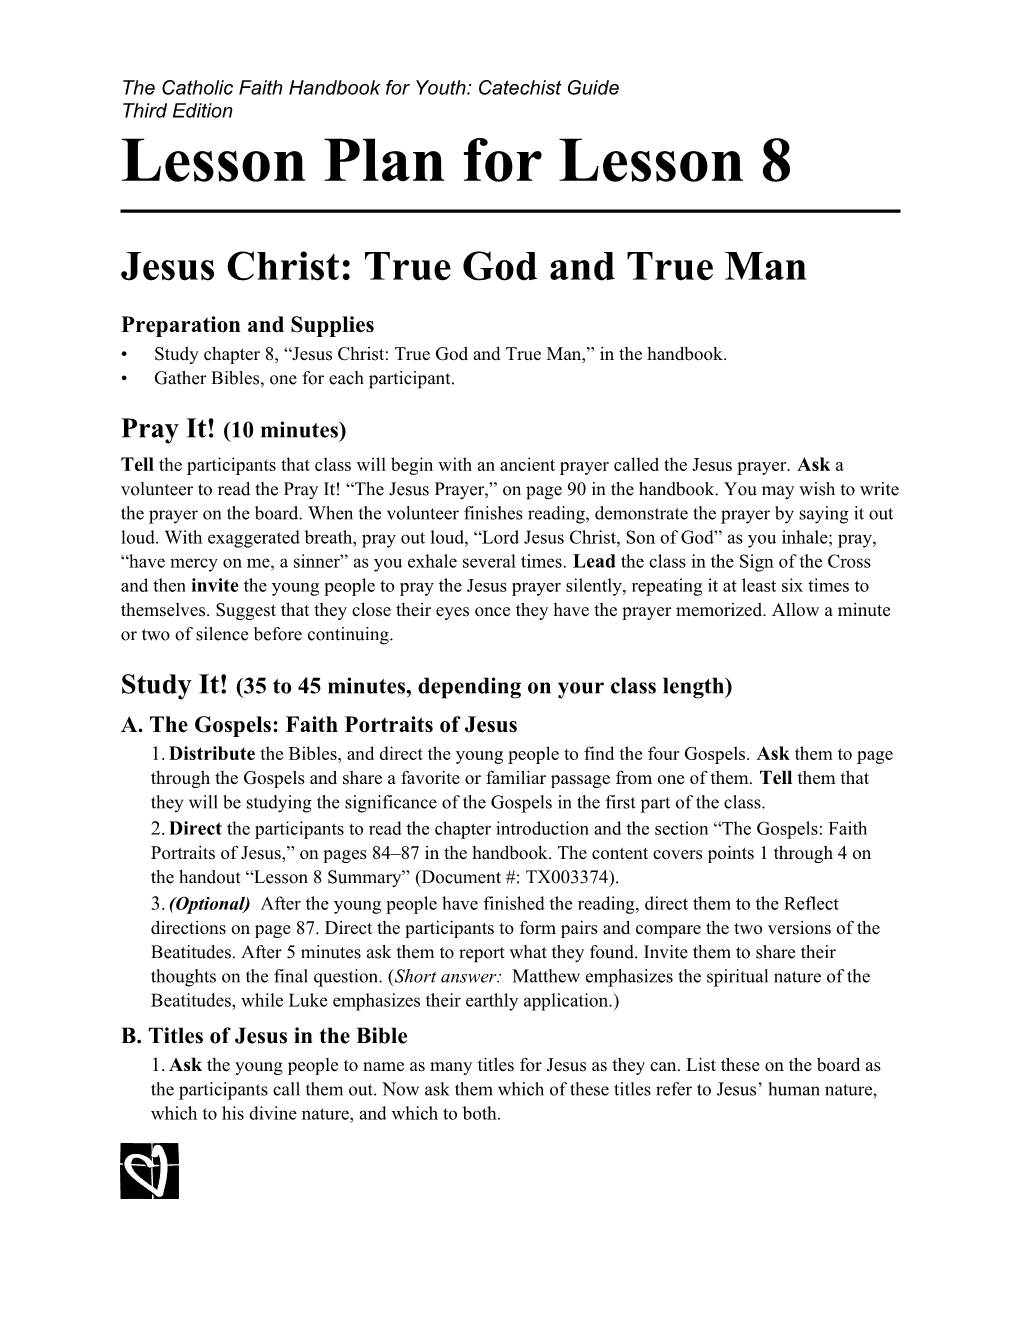 Lesson Plan for Lesson 8